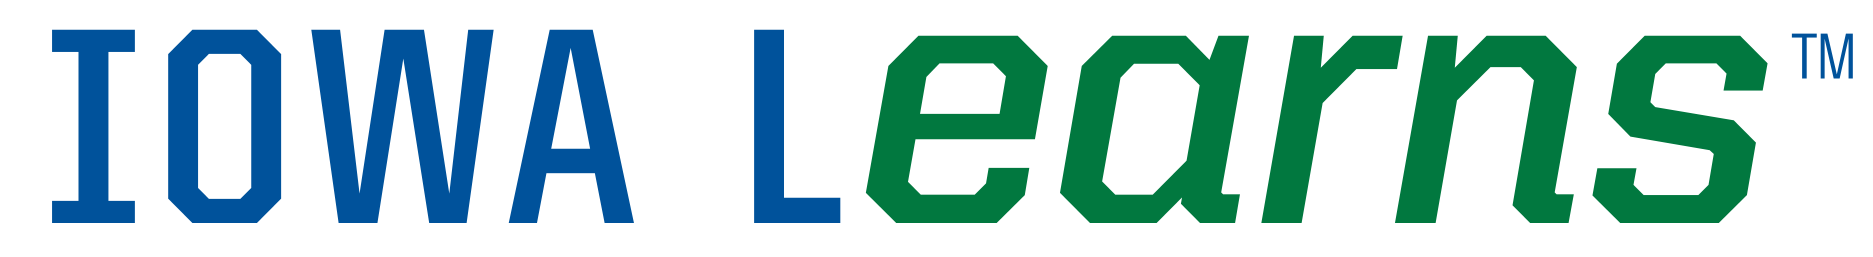 Iowa Learns logo